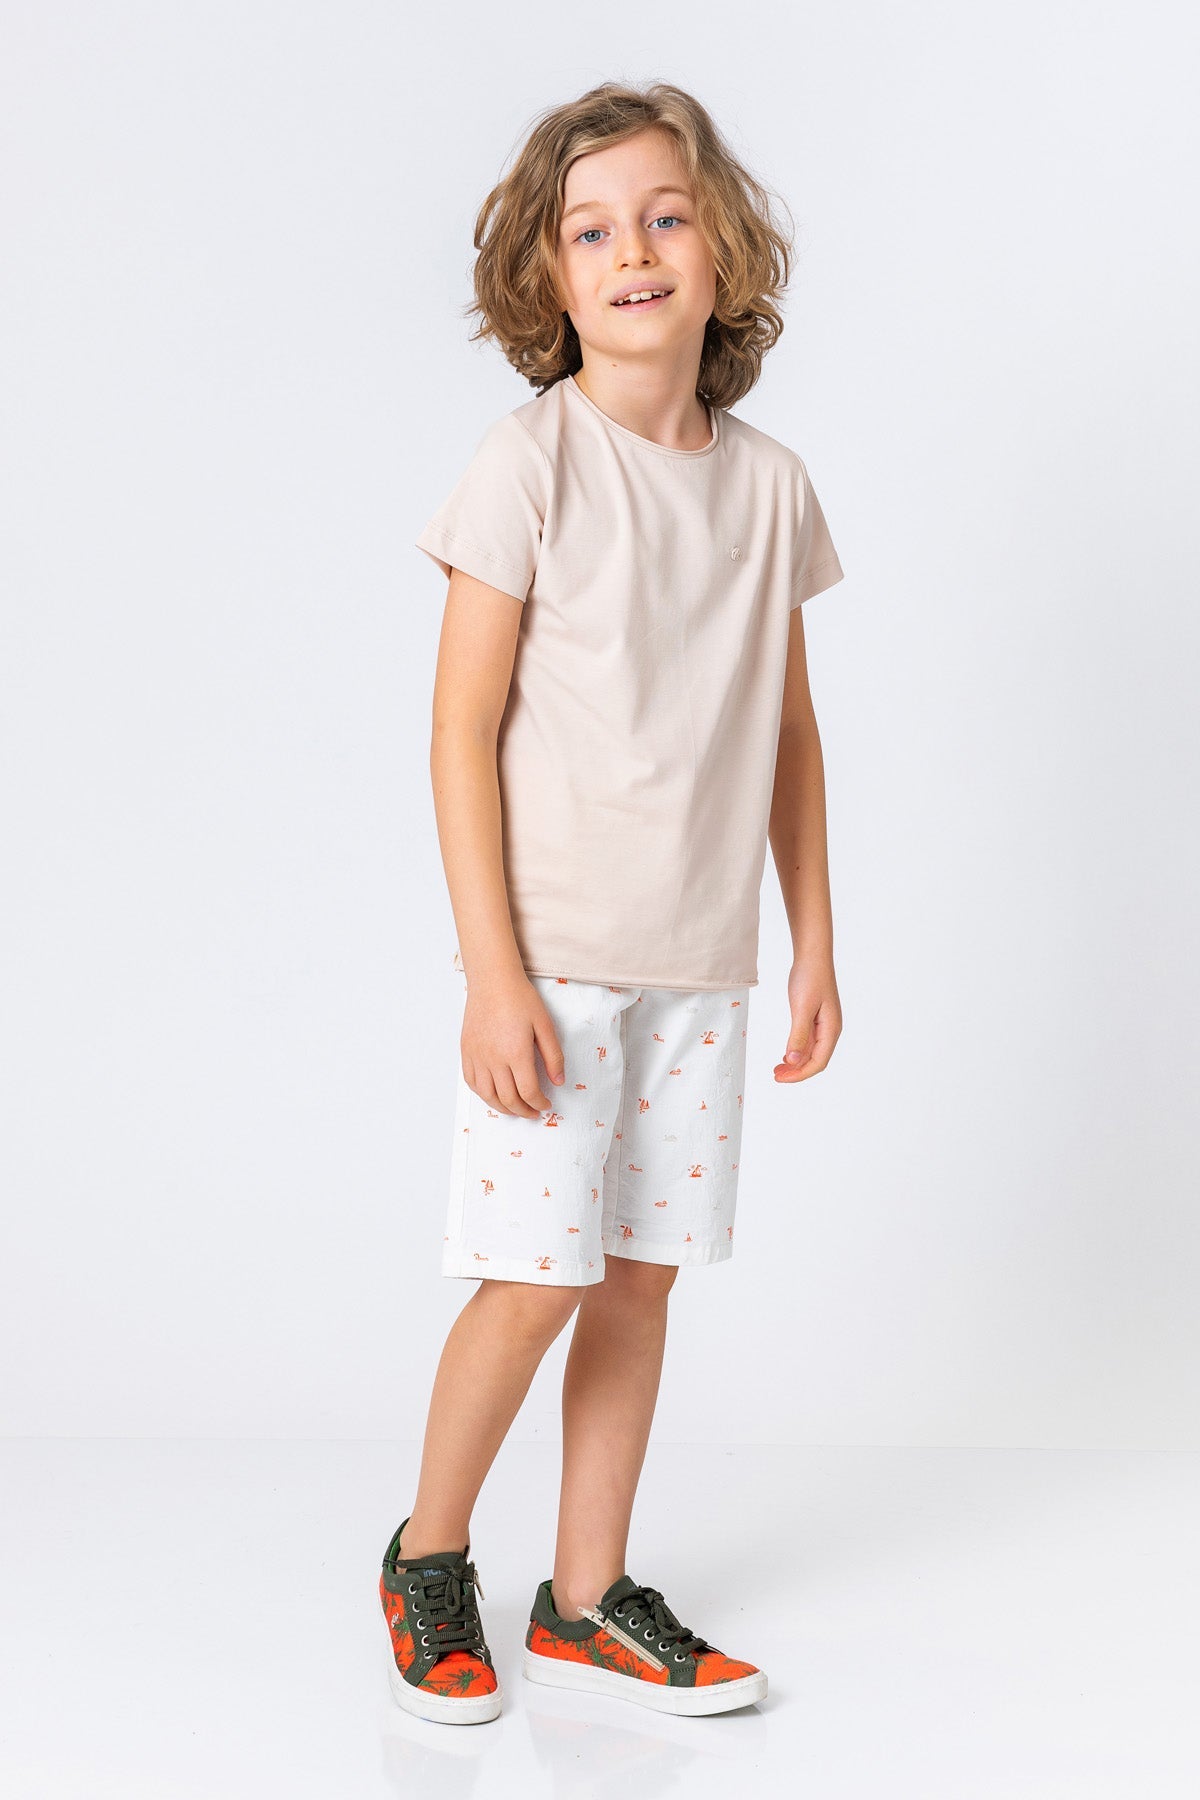 Neck Kids InCity Basic Round Short Boys T-Shirt Sleeve Solid Plain